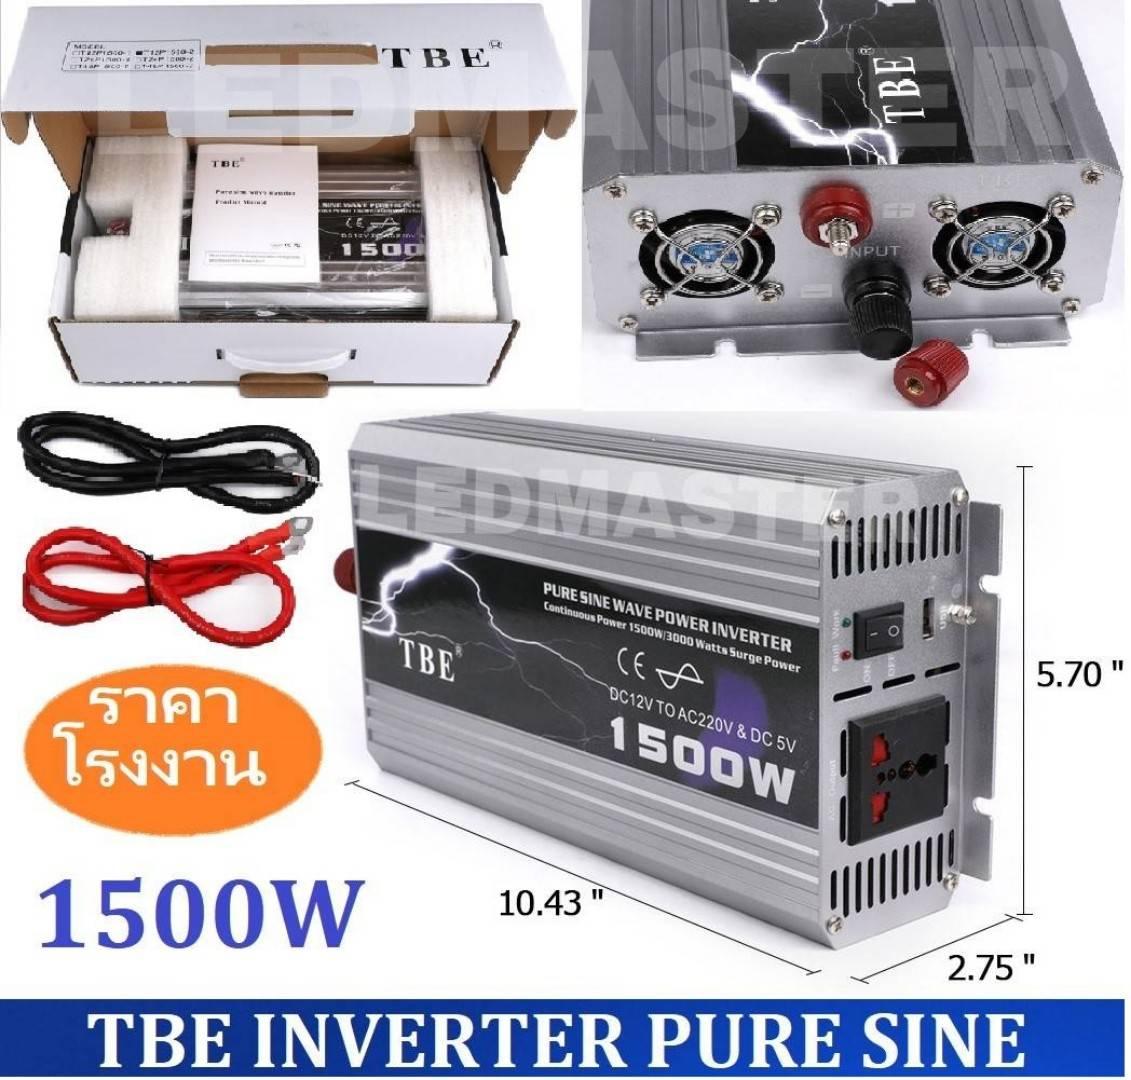 TBE inverter pure sine wave power inverter 12V 1500W เครื่องแปลงไฟ อินเวอร์เตอร์ หม้อแปลง เครื่องแปลงไฟ ไฟแบตเป็นไฟบ้าน โซล่าเซลล์  เครื่องปั่นน้ำผลไม้ ชุดแห่เครื่องเสียง จำนวน 1 ชิ้น